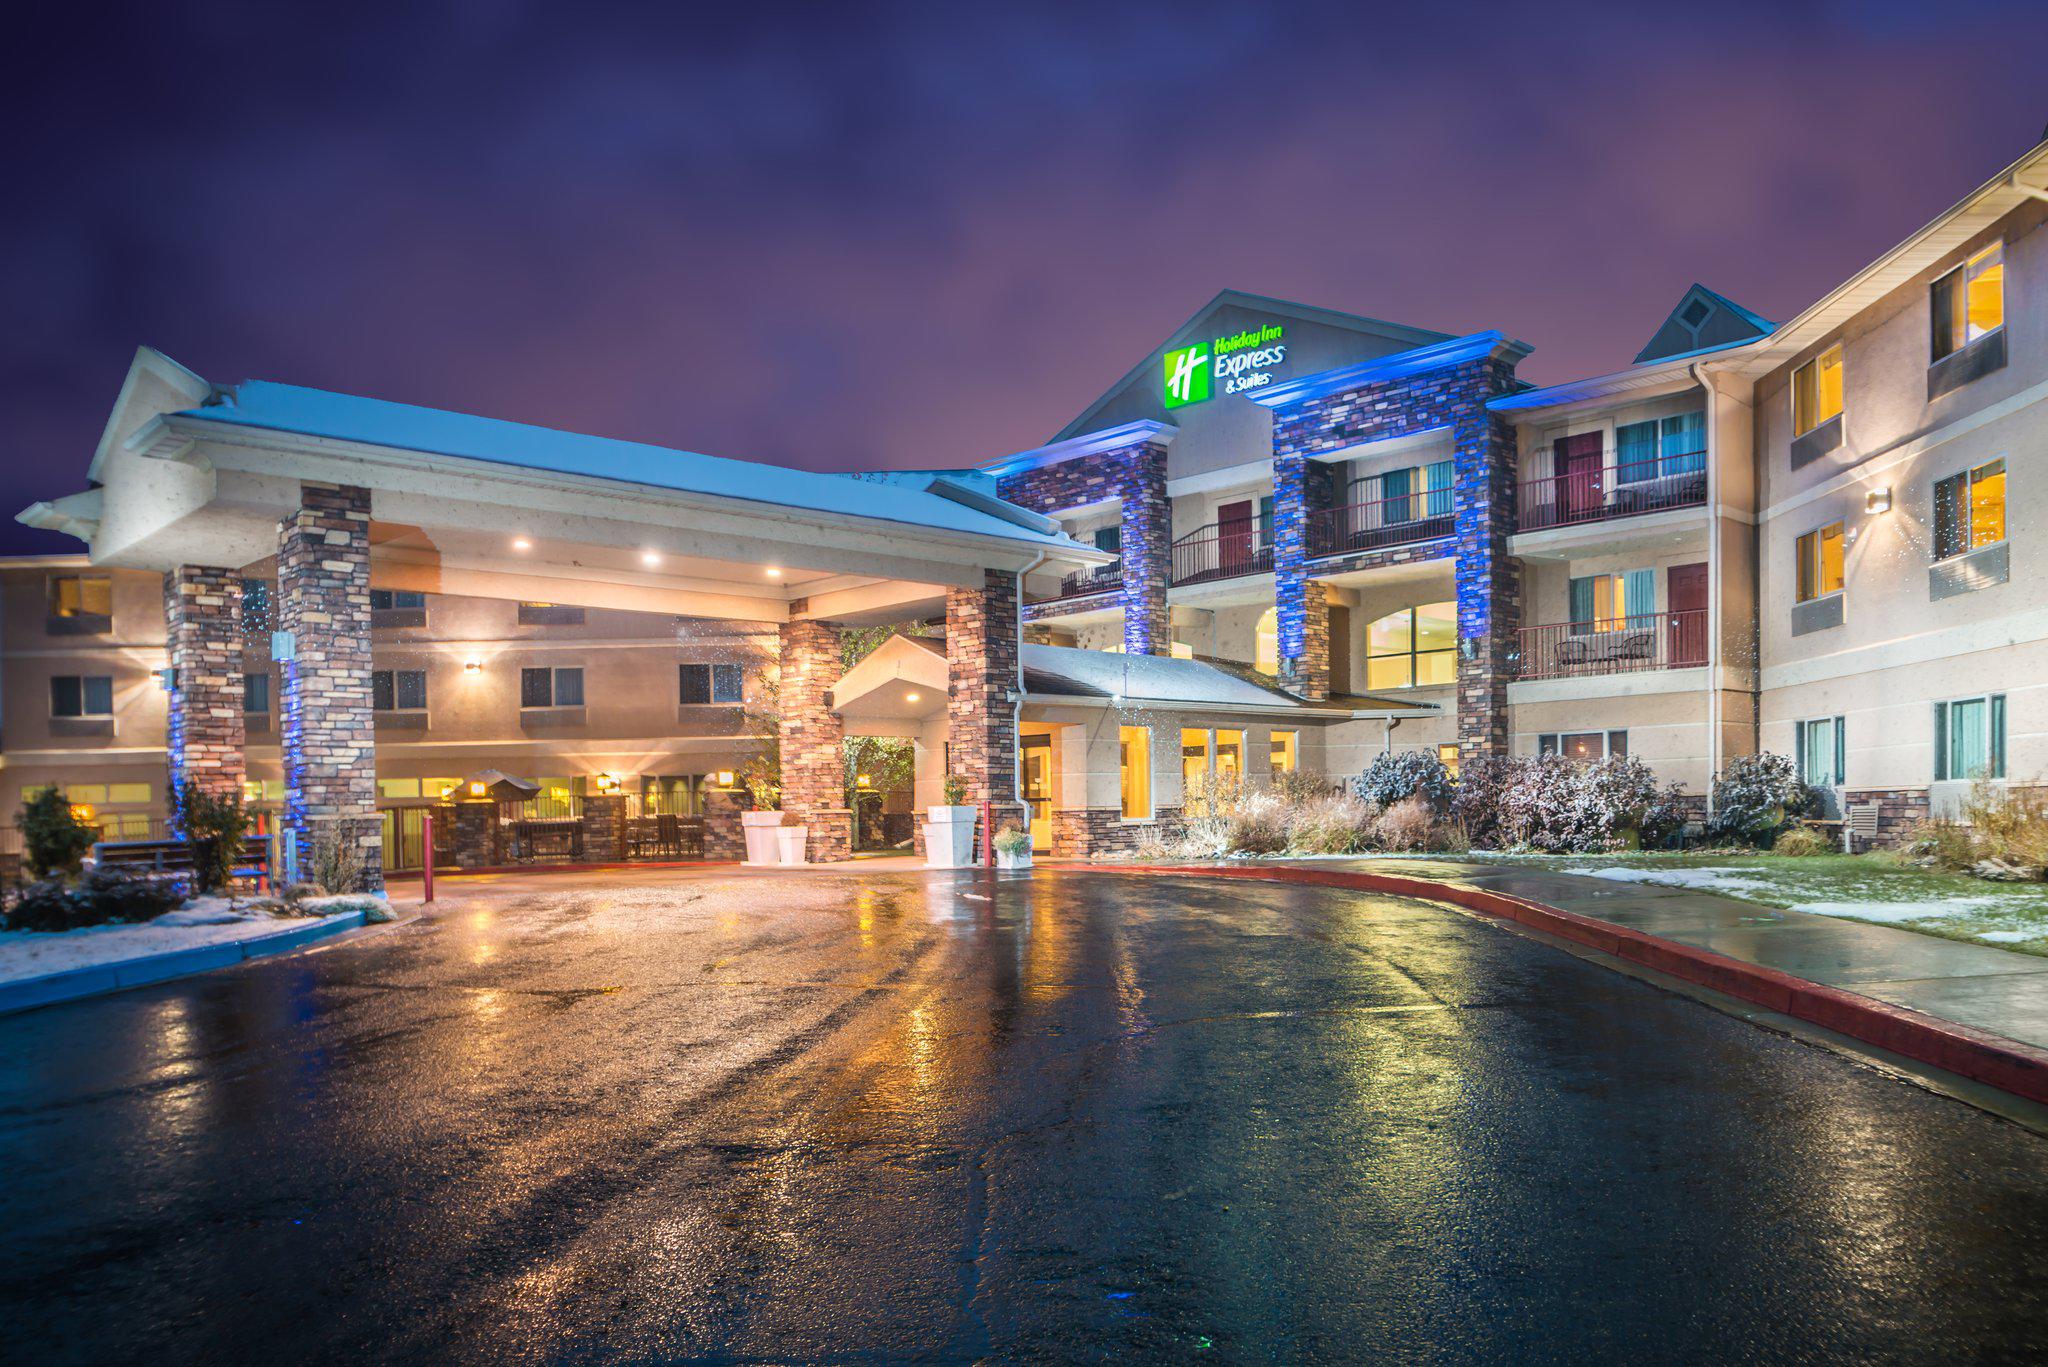 Holiday Inn Express & Suites Gunnison Photo